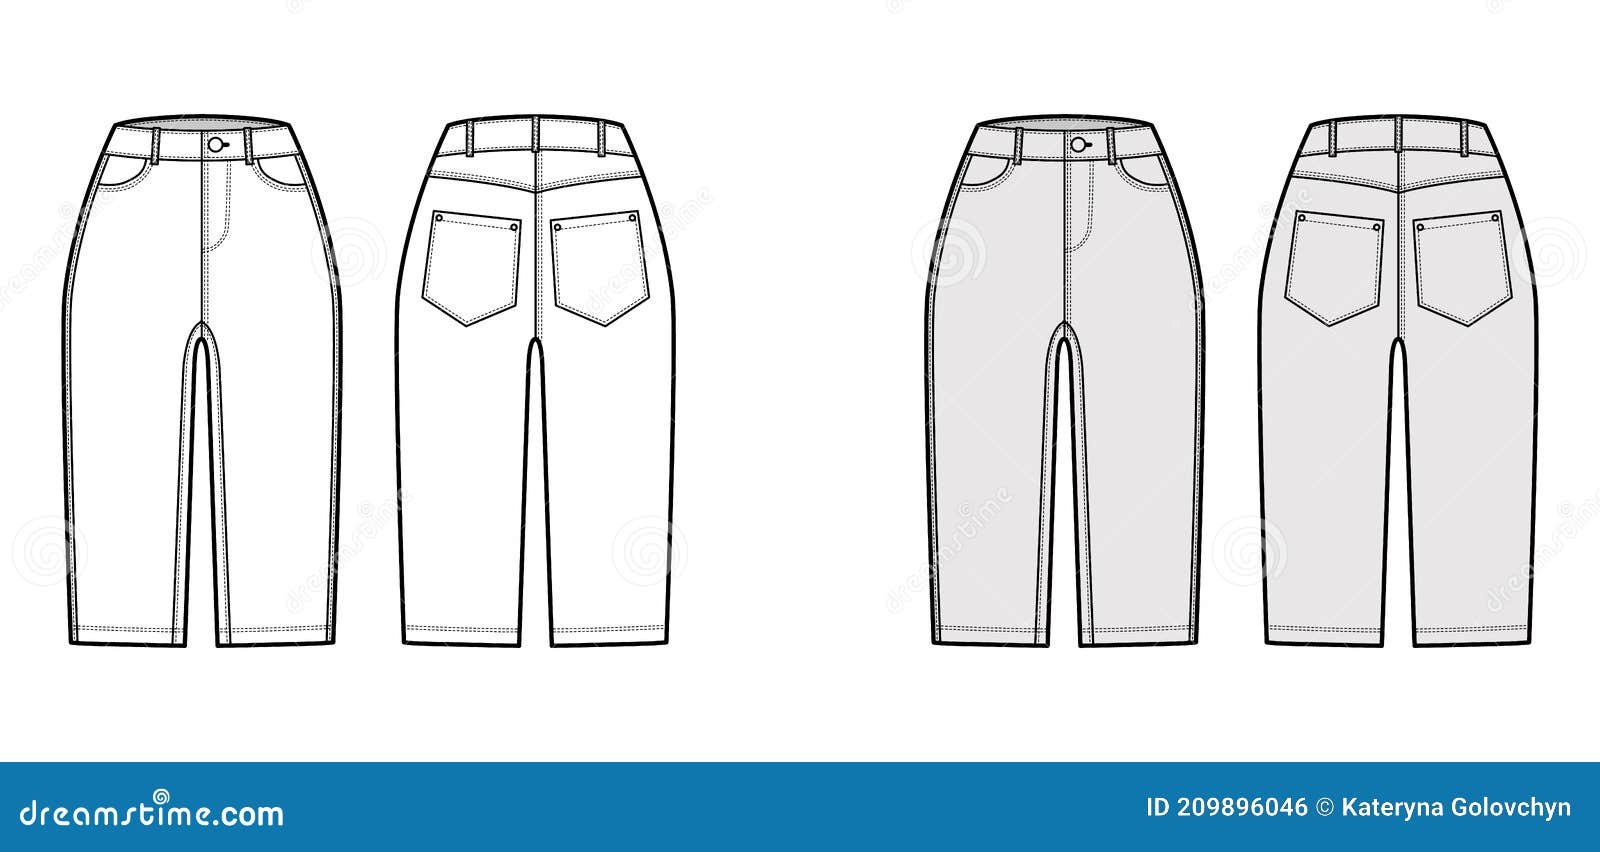 Denim Short Pants Technical Fashion Illustration with Knee Length ...